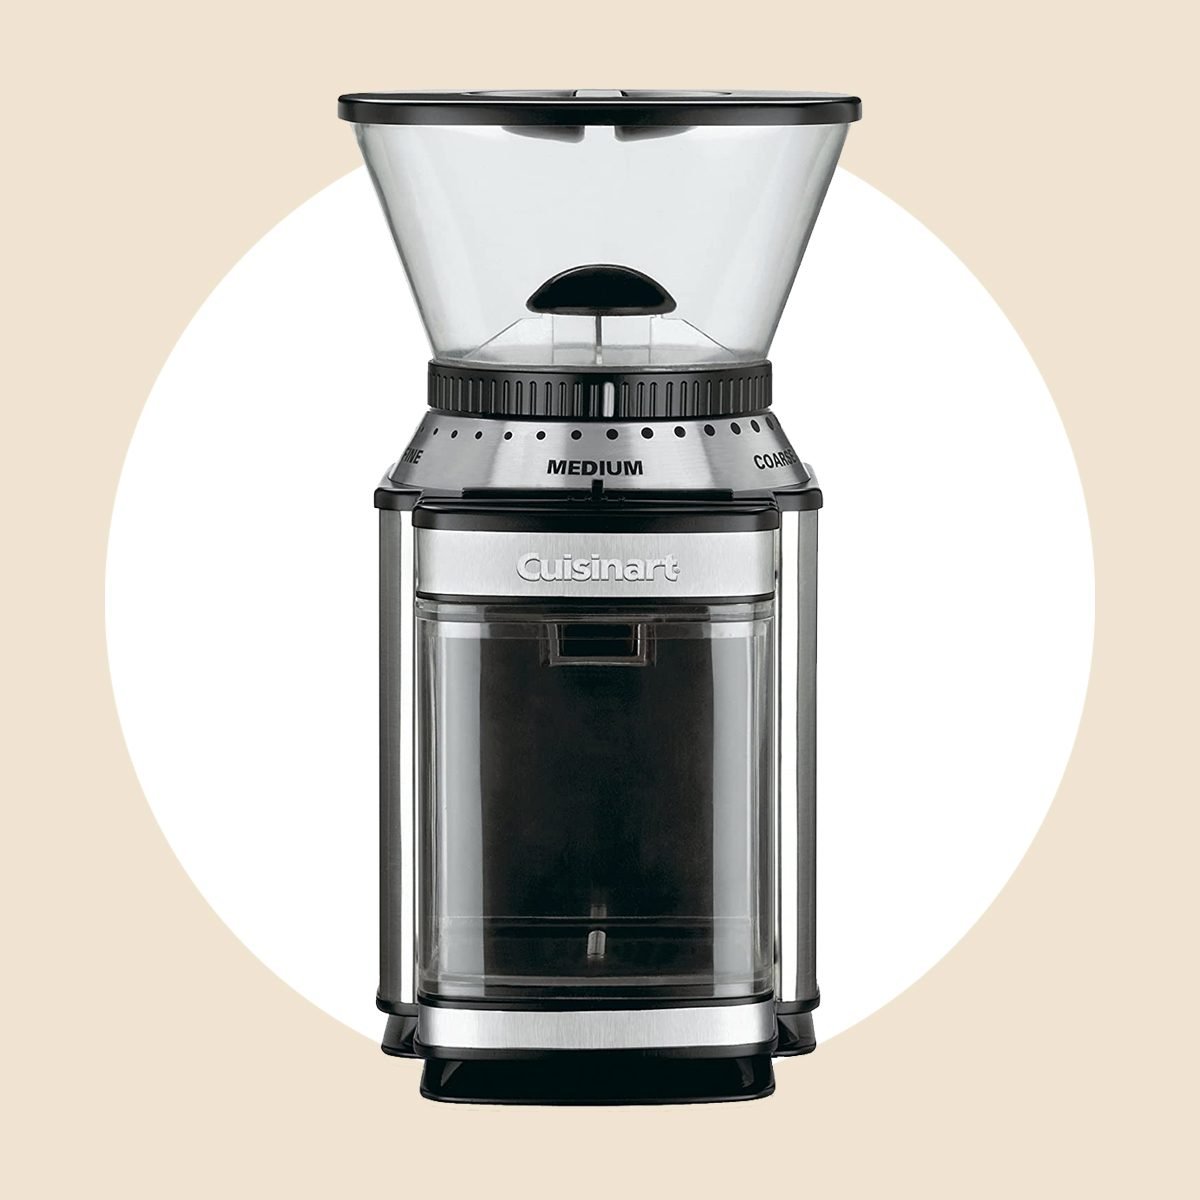 https://www.tasteofhome.com/wp-content/uploads/2022/04/cuisinart-coffee-grinder-via-amazon.com-ecomm.jpg?fit=700%2C700